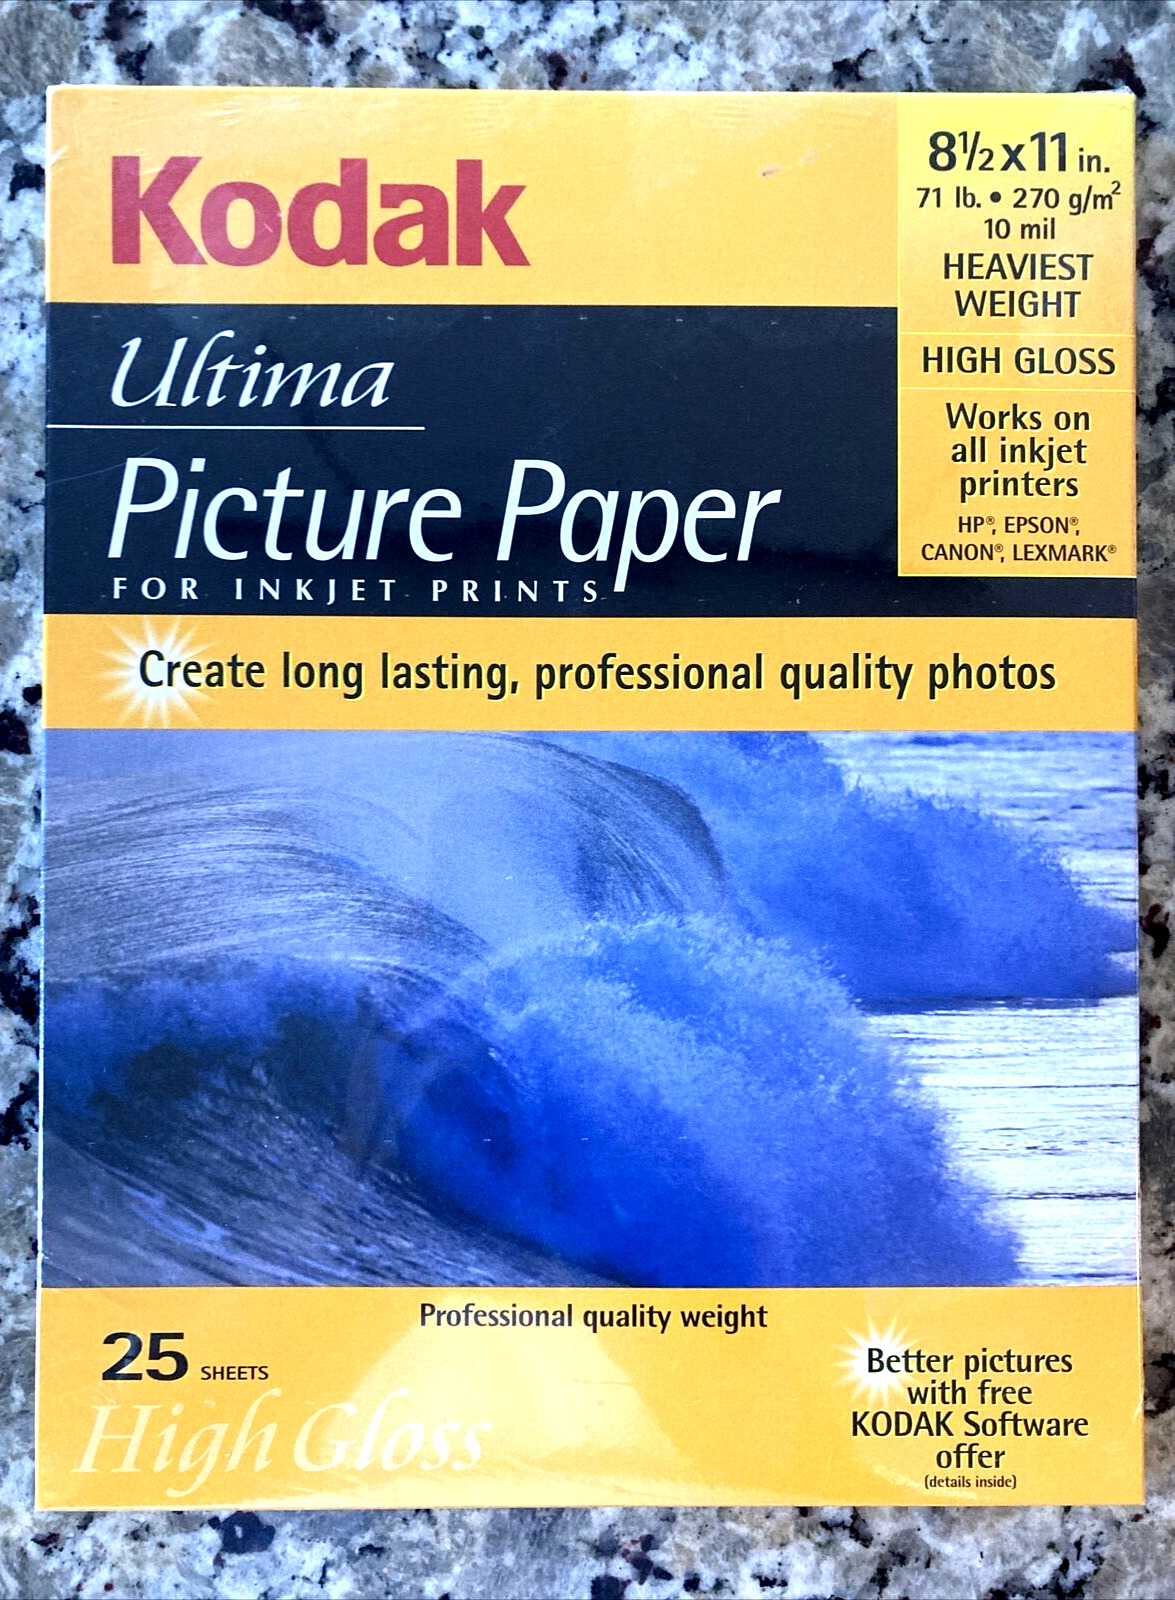 Kodak Ultima Picture Paper for Inkjet Prints 25 Sheets High Gloss 10 mil  8.5x11